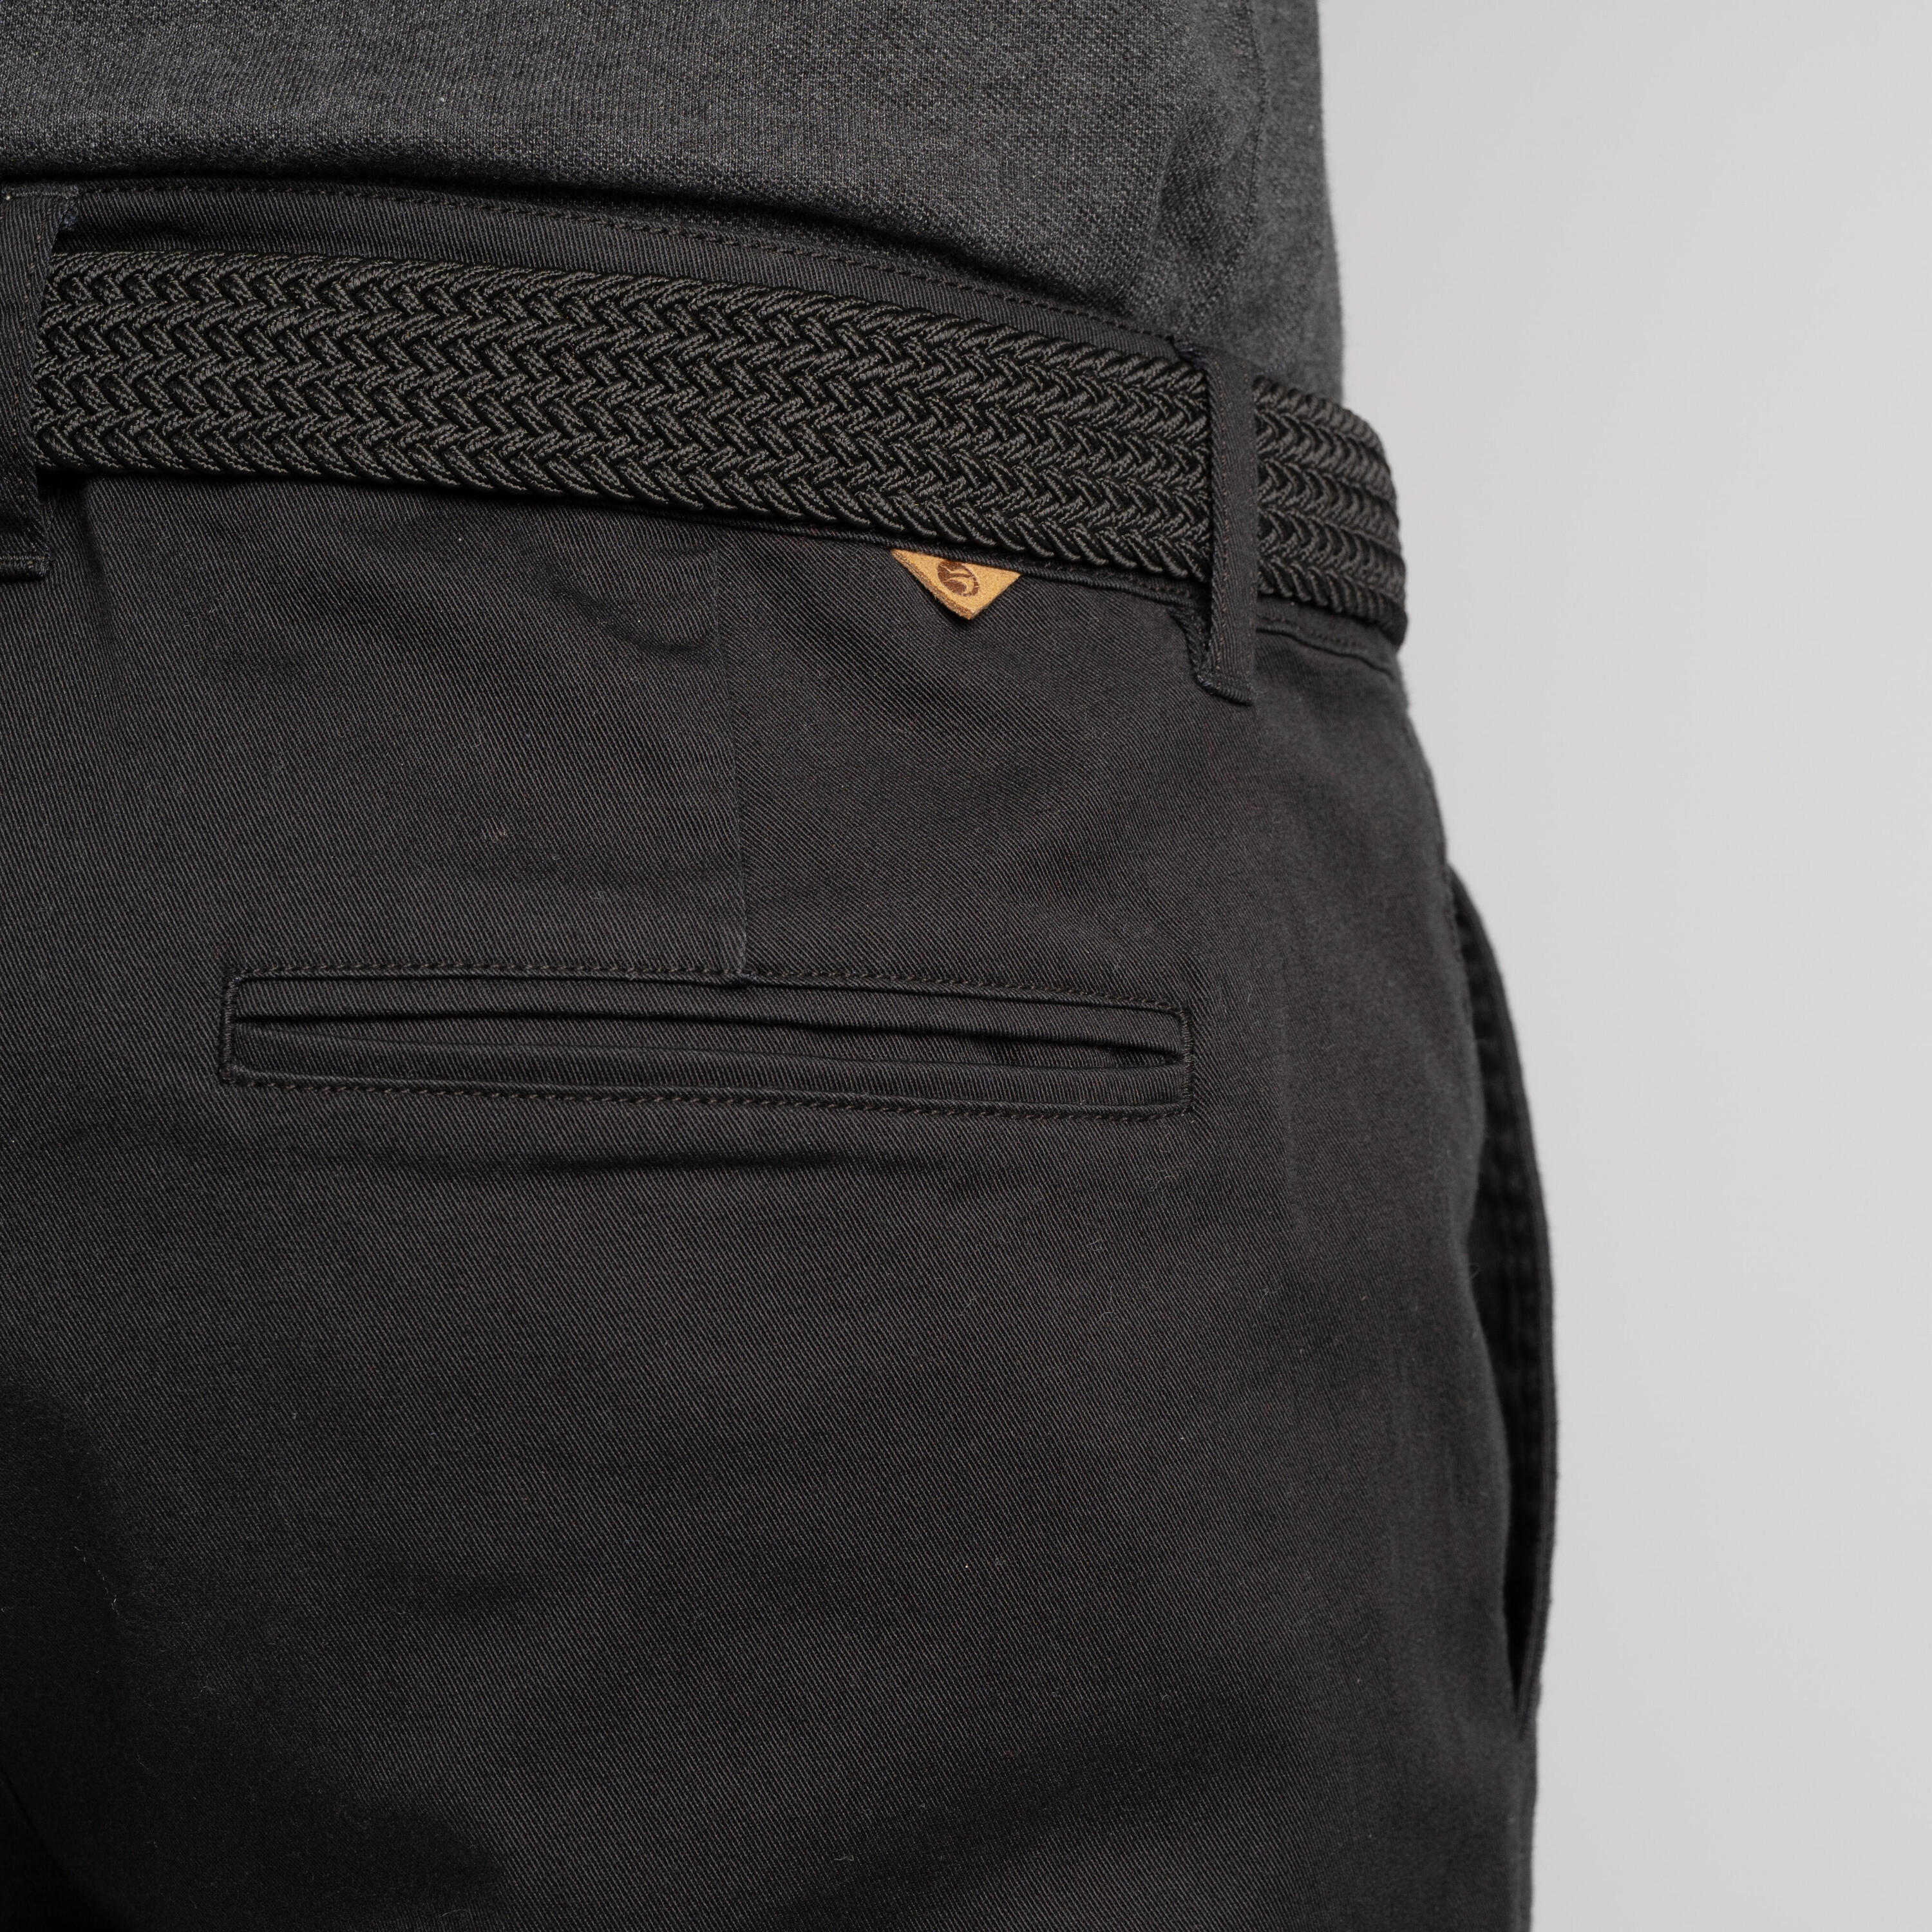 Men's golf trousers - MW500 black 5/6